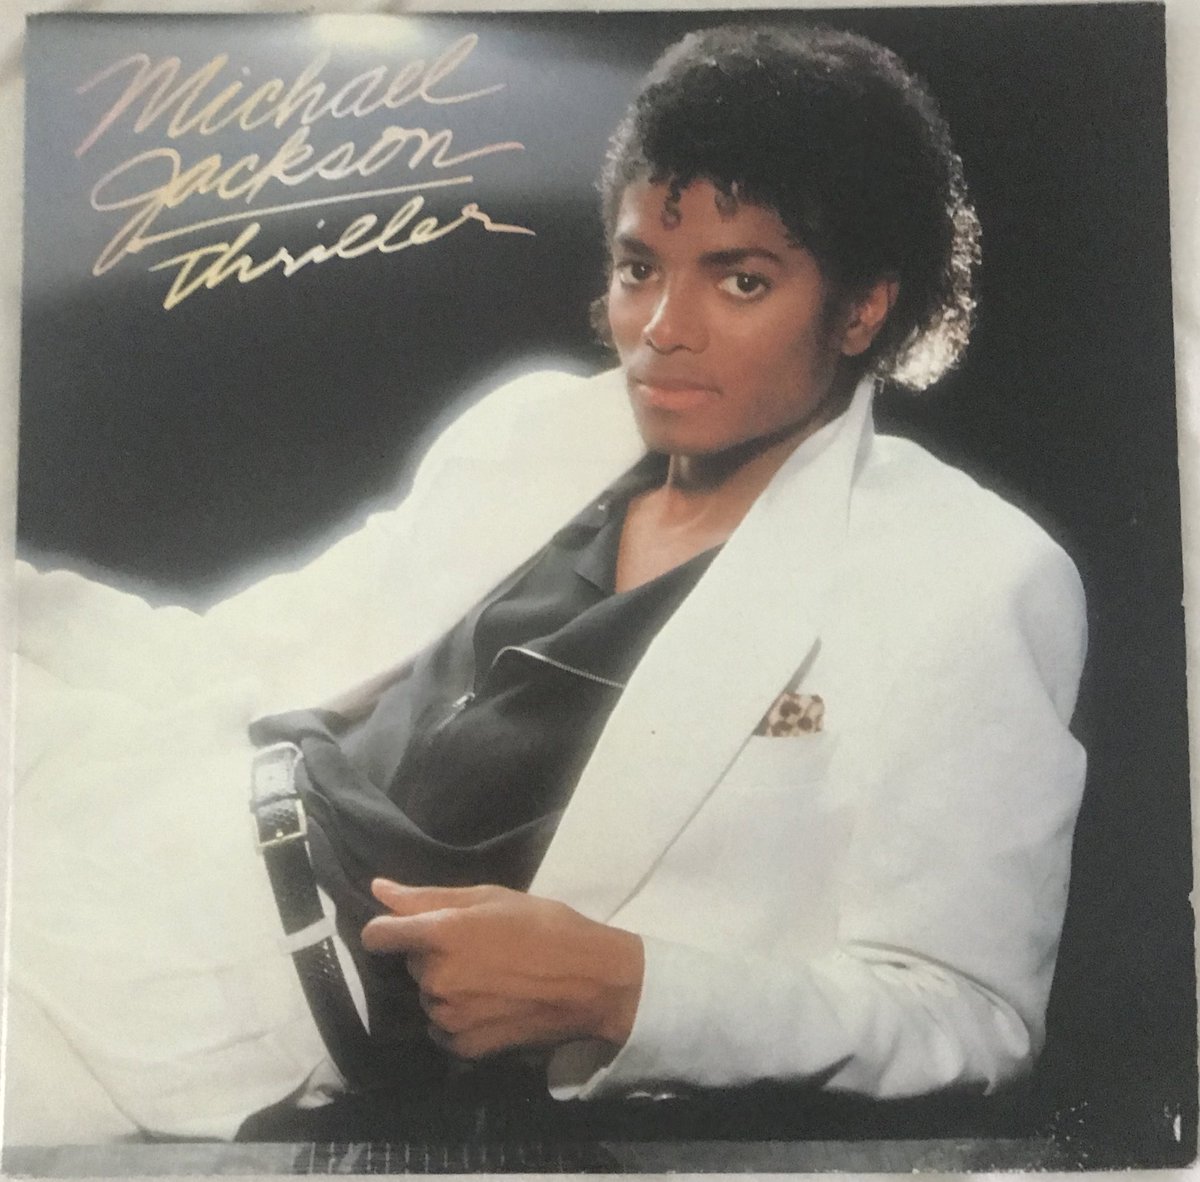 Michael Jackson - ThrillerIncludes:Thriller (LP)Rating: 10/10